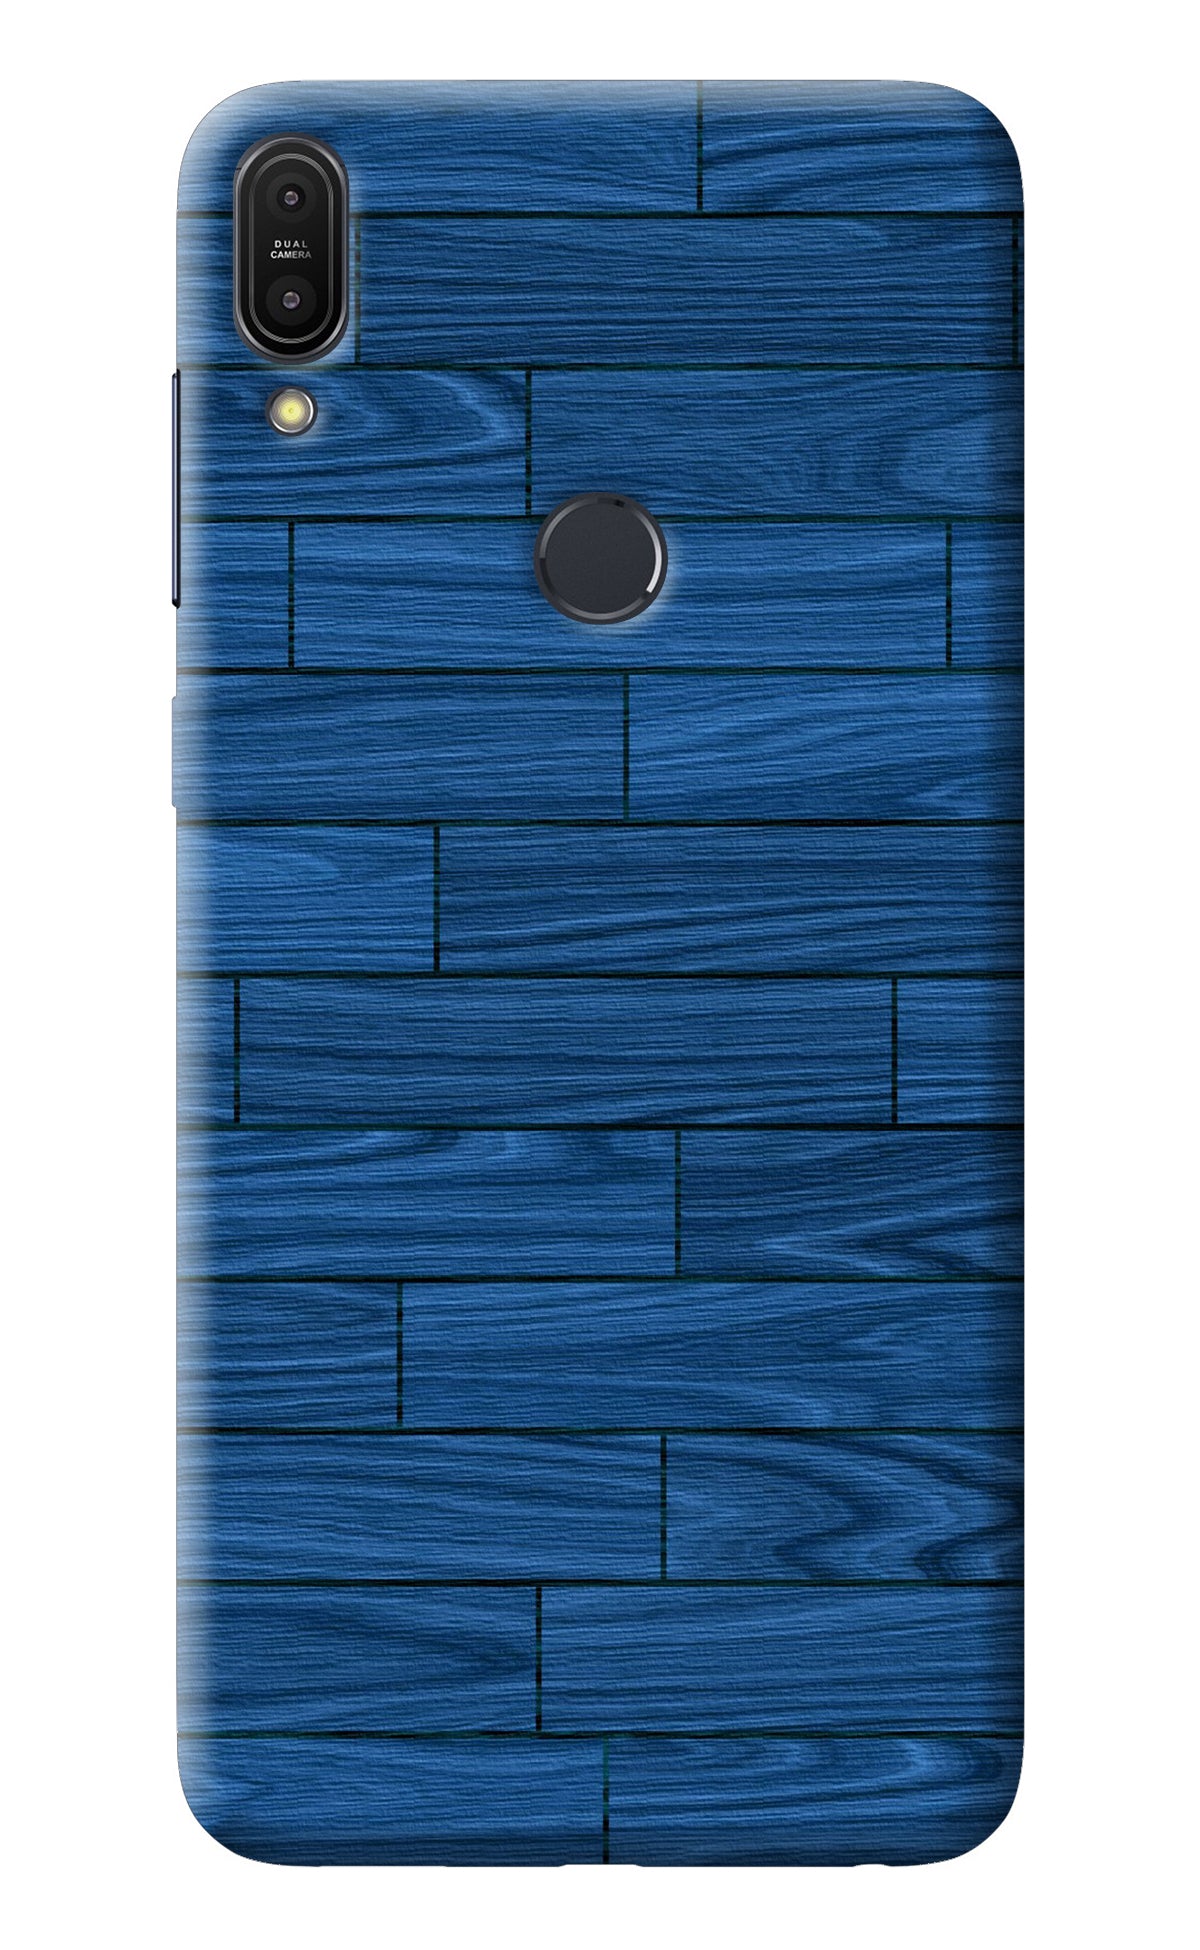 Wooden Texture Asus Zenfone Max Pro M1 Back Cover